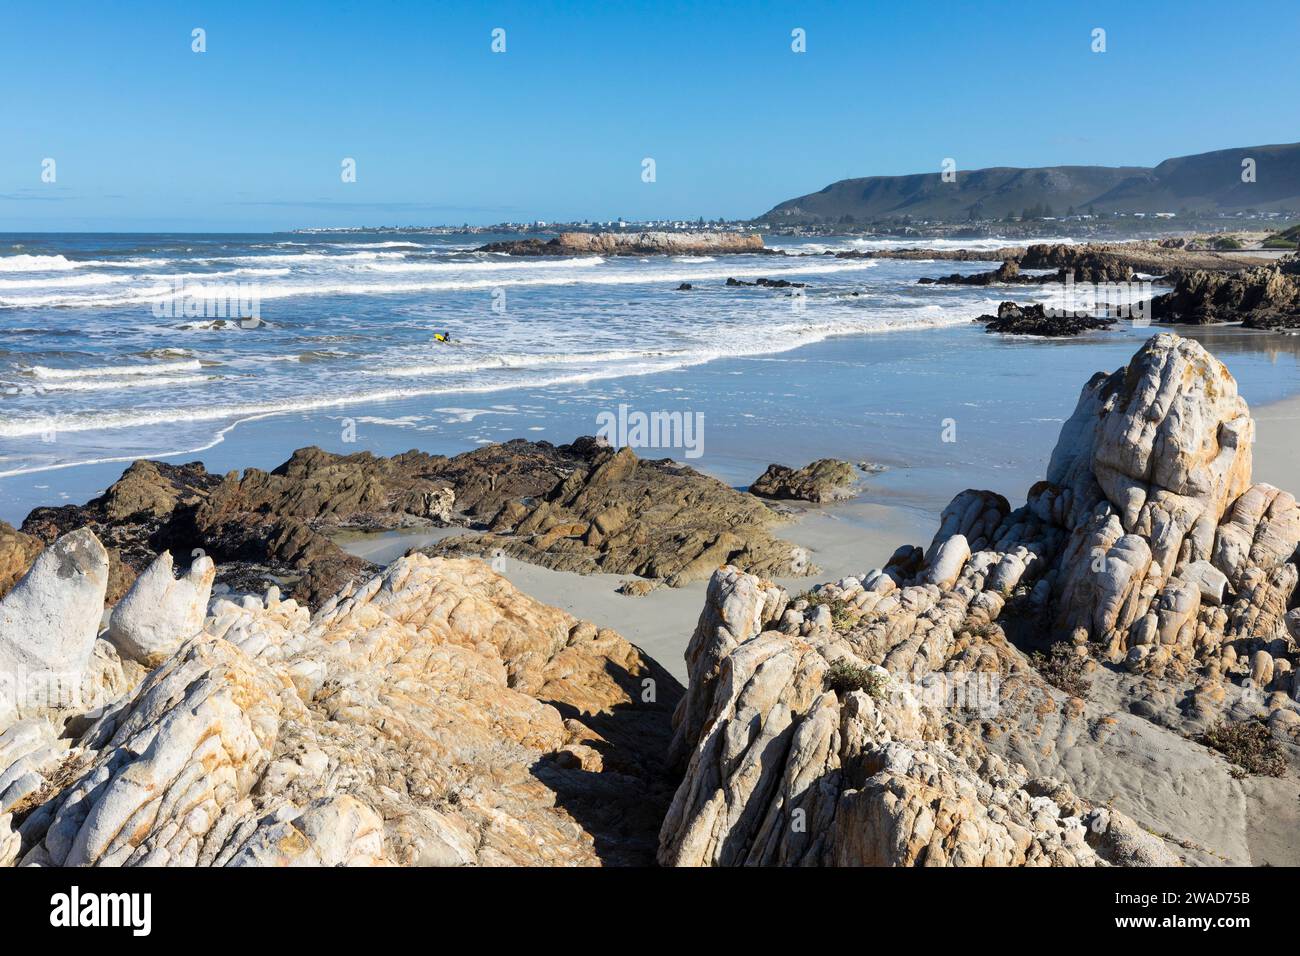 South Africa, Hermanus, Rocky coastline and sea at Voelklip Beach Stock Photo